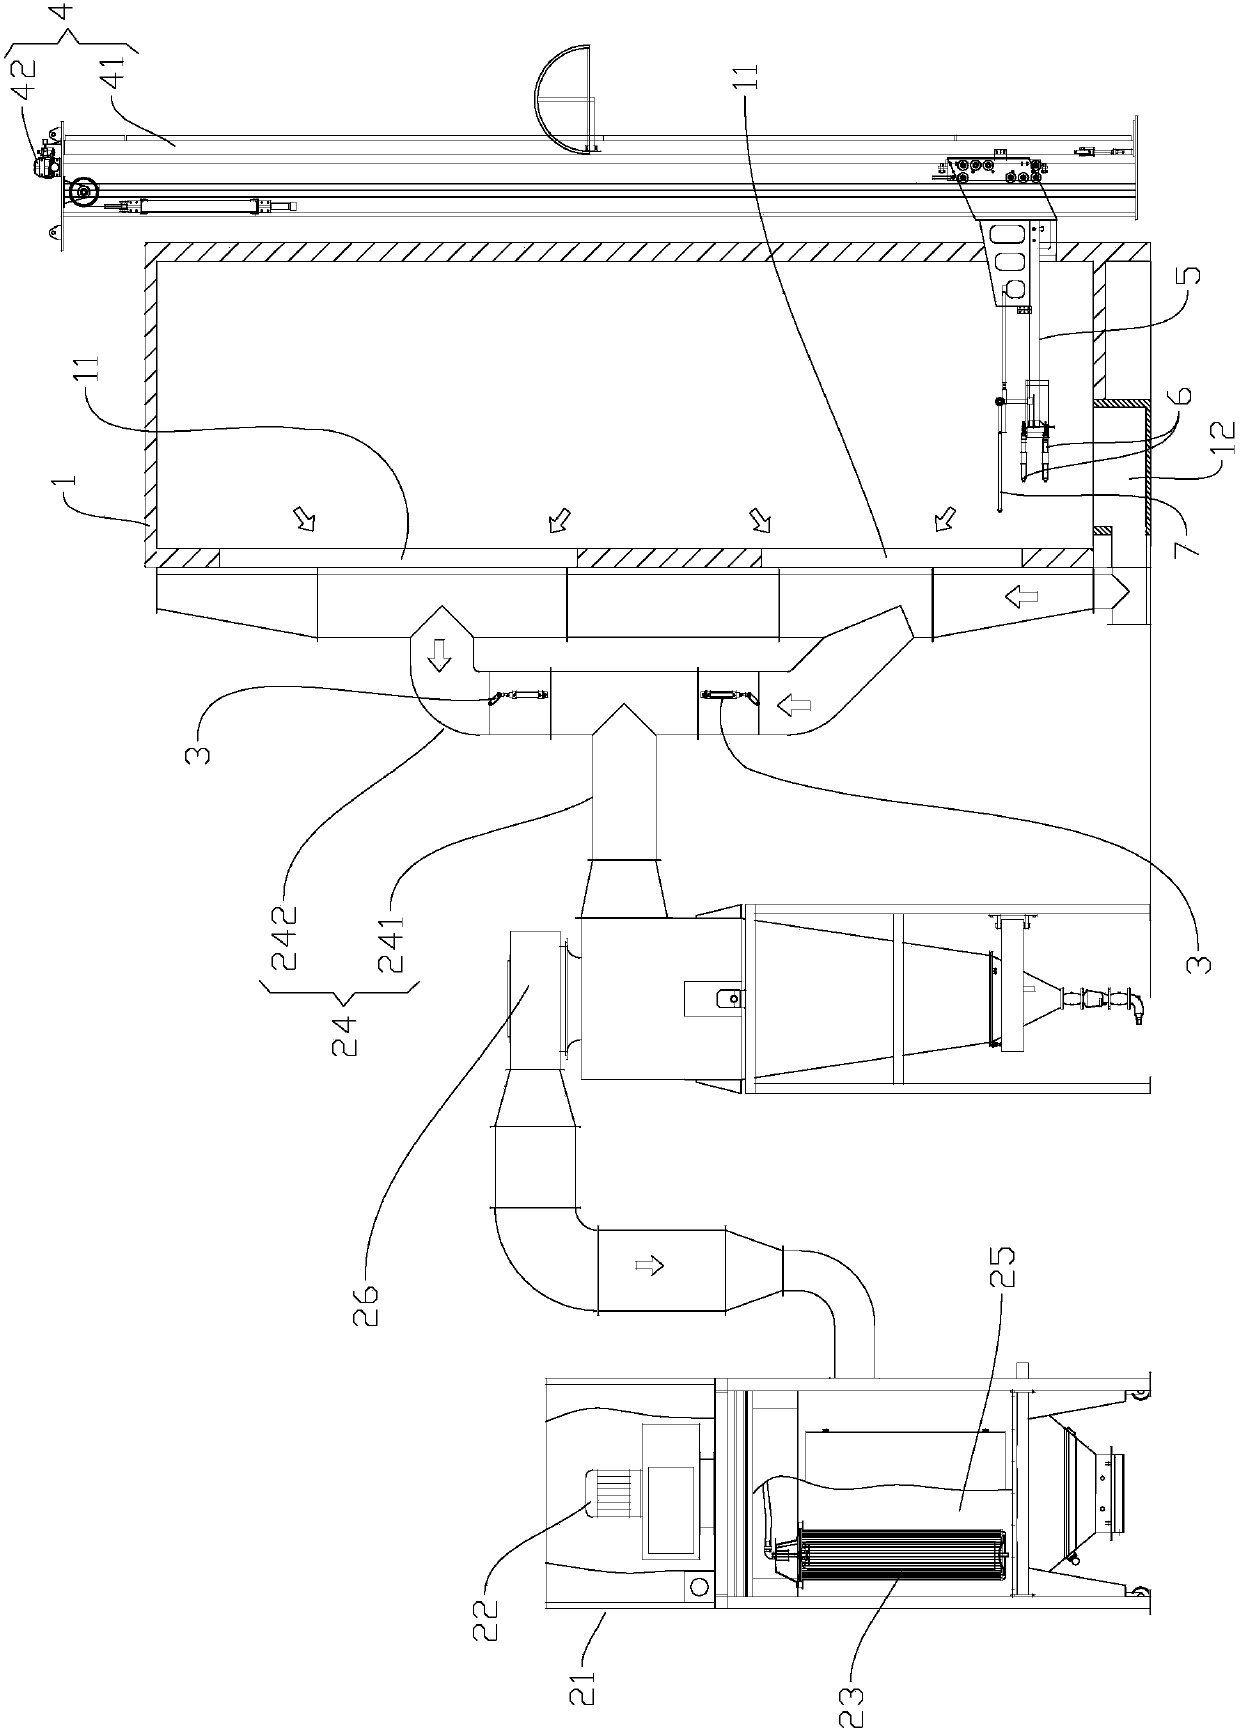 Vertical-type spraying chamber system